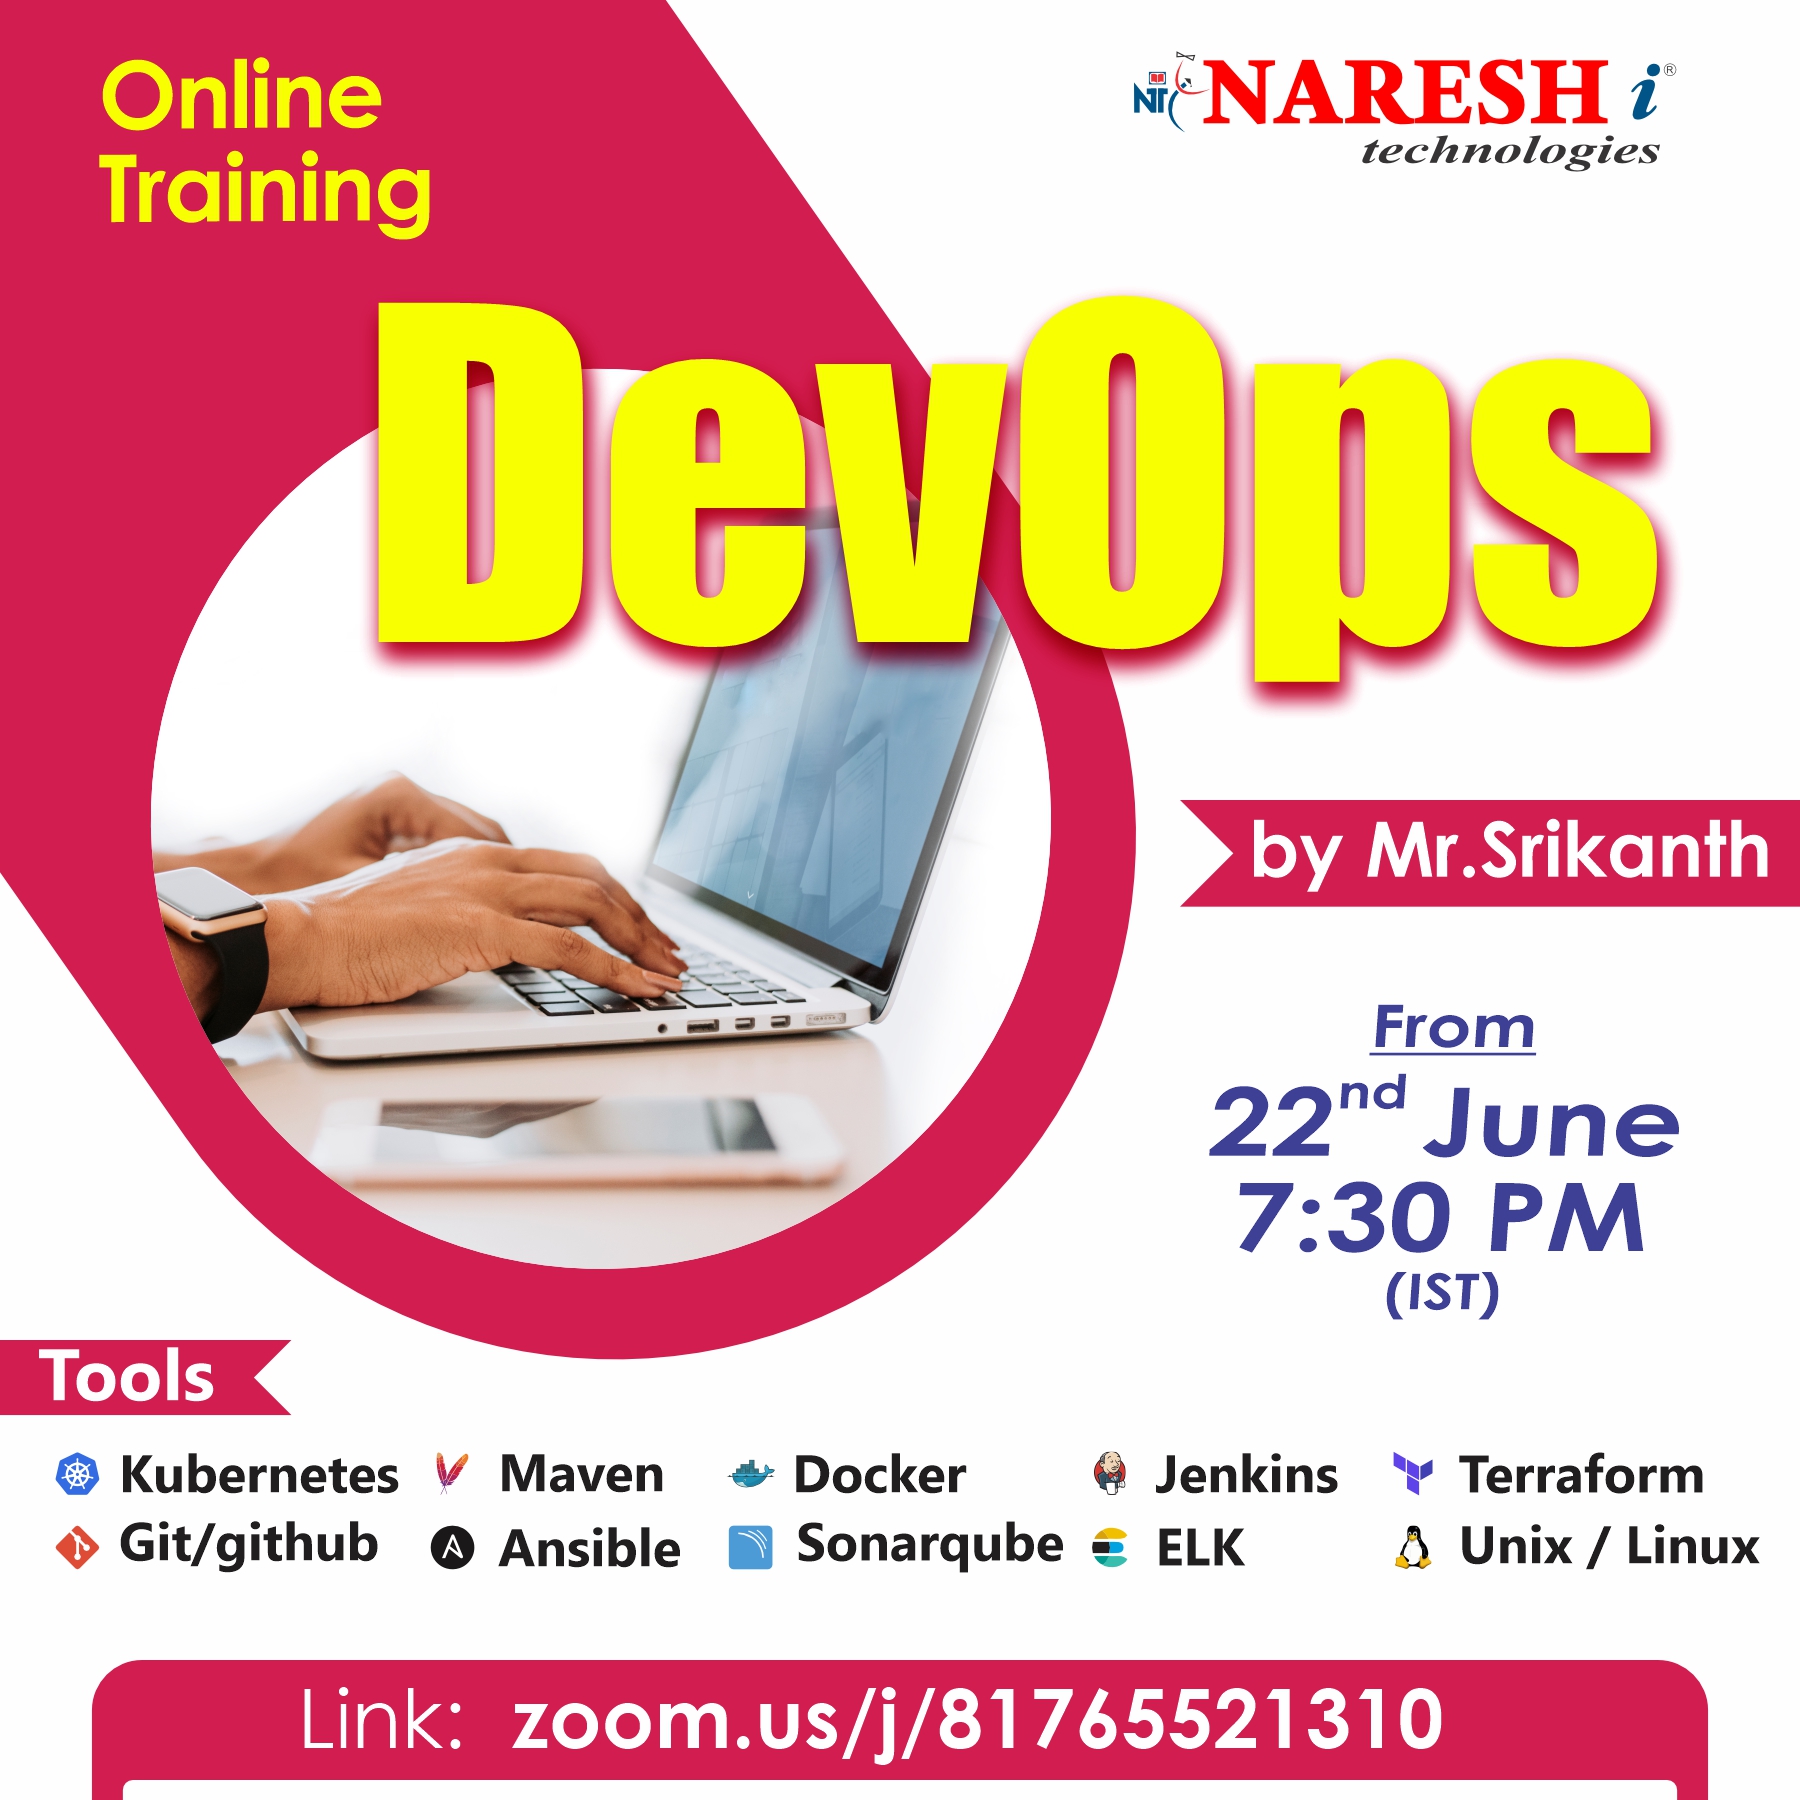 Free Demo On DevOps by Mr.Srikanth in NareshIT - 8179191999, Online Event